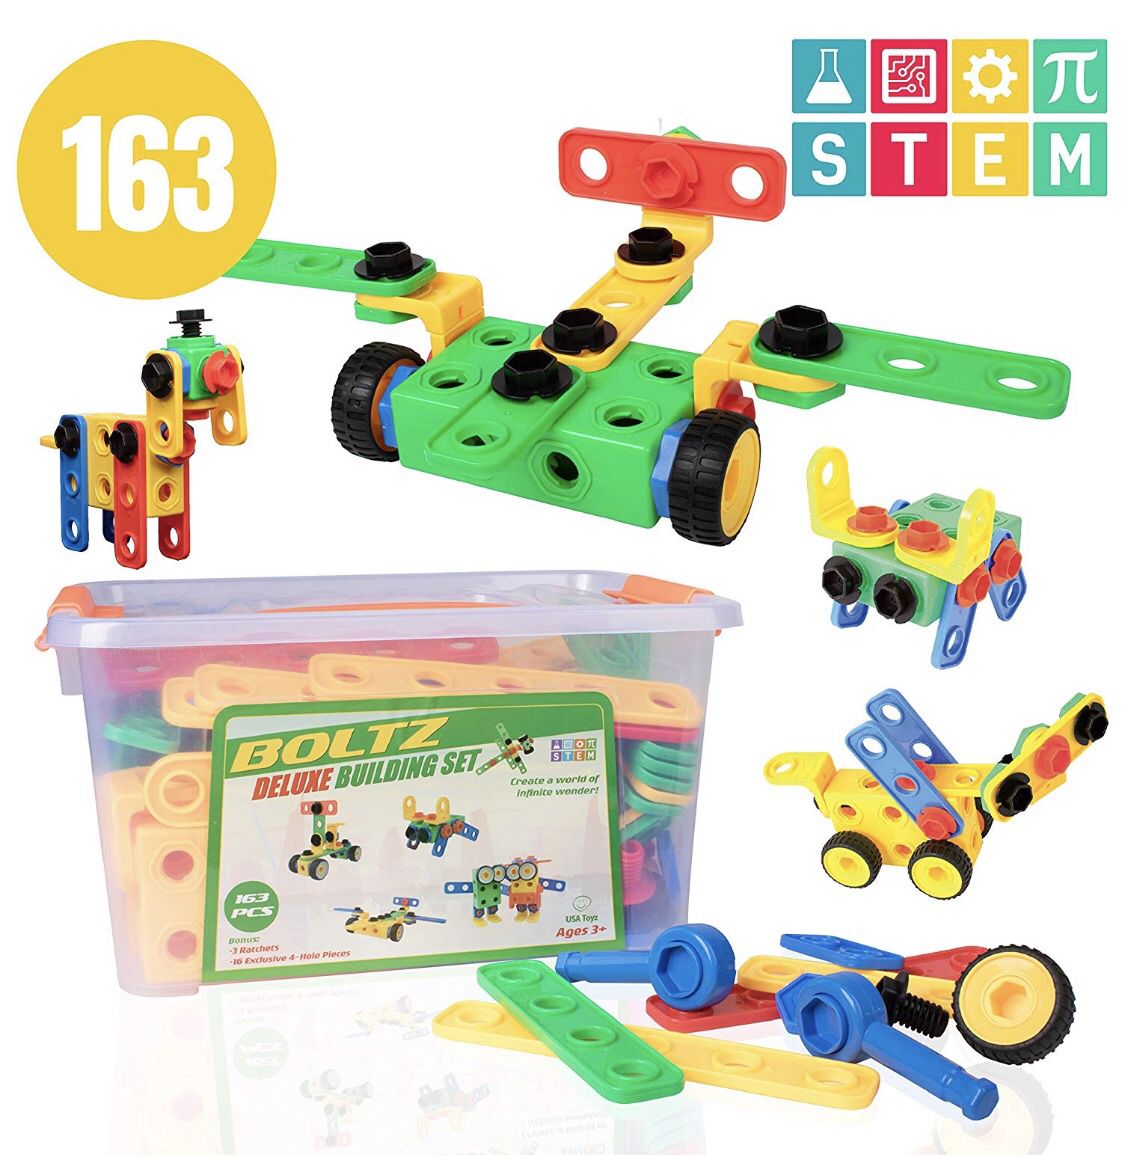 USA Toyz 163pk STEM Building Toys for Kids – Educational Preschool Kindergarten Building Games, Gear Tinker Toys for Toddler Boys Girls Age 3 4 5 6 7